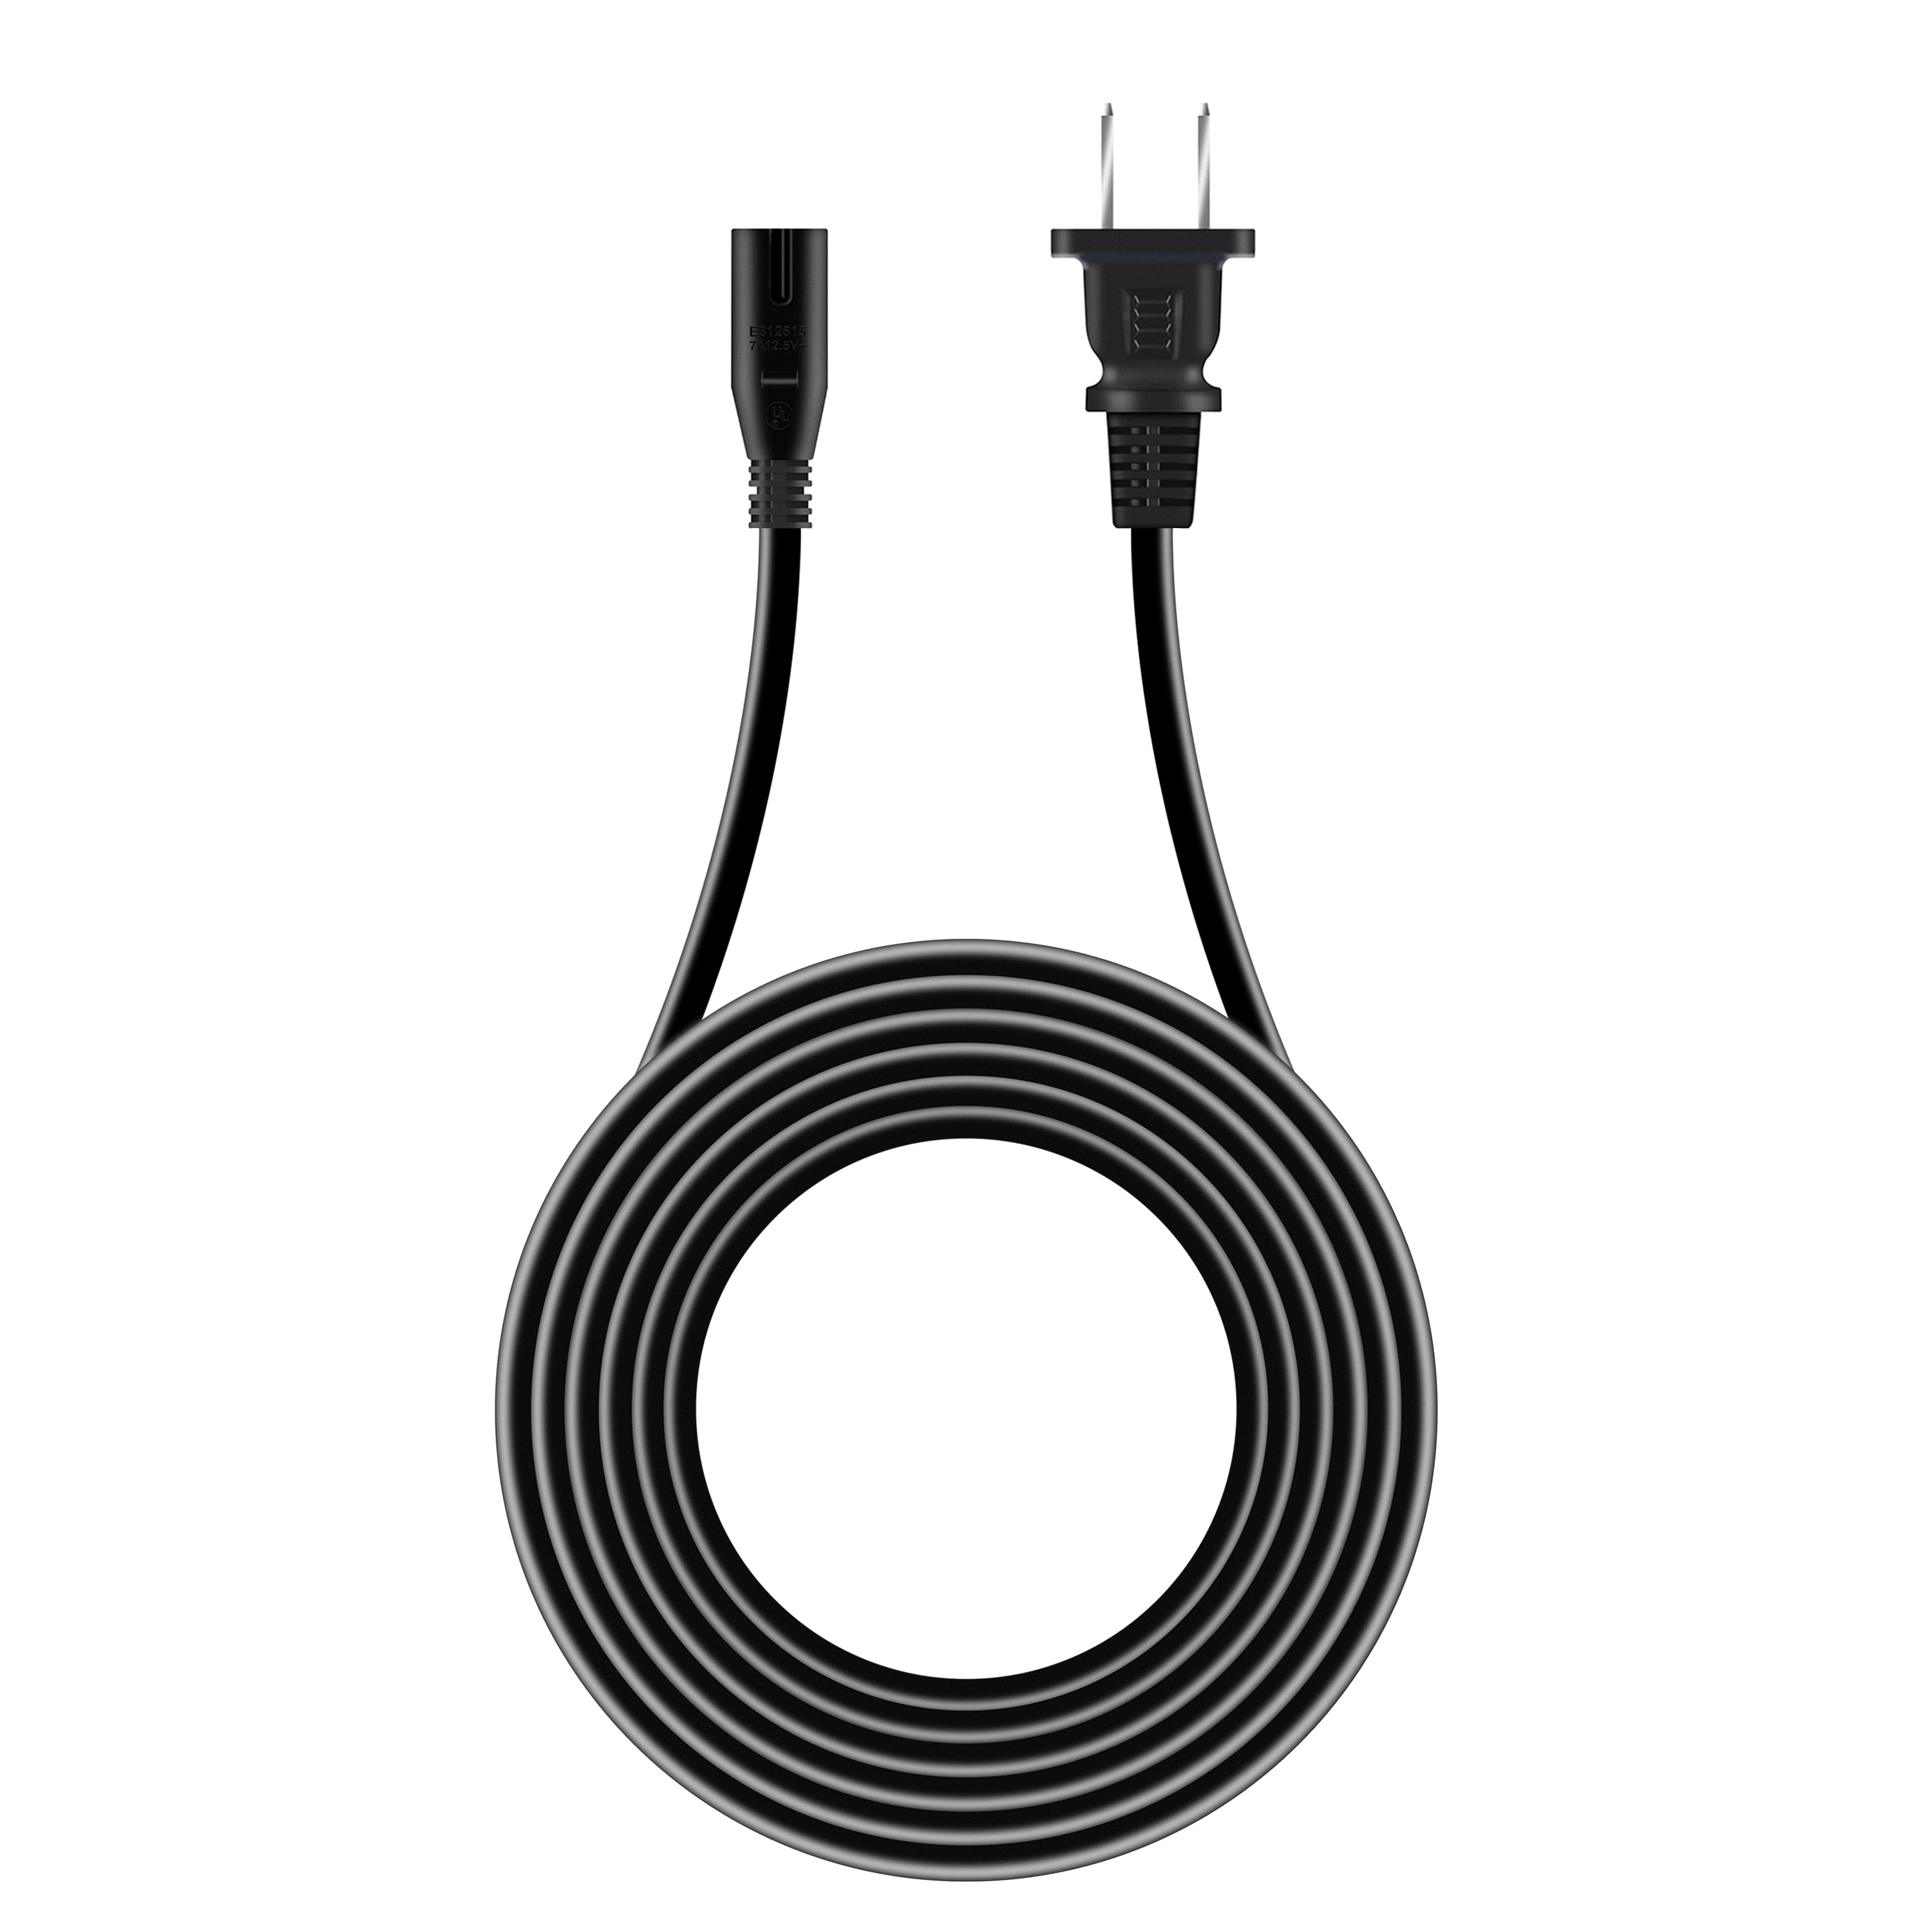 Mains Power Cable for Bang & Olufsen B&O Black 2 Metres 